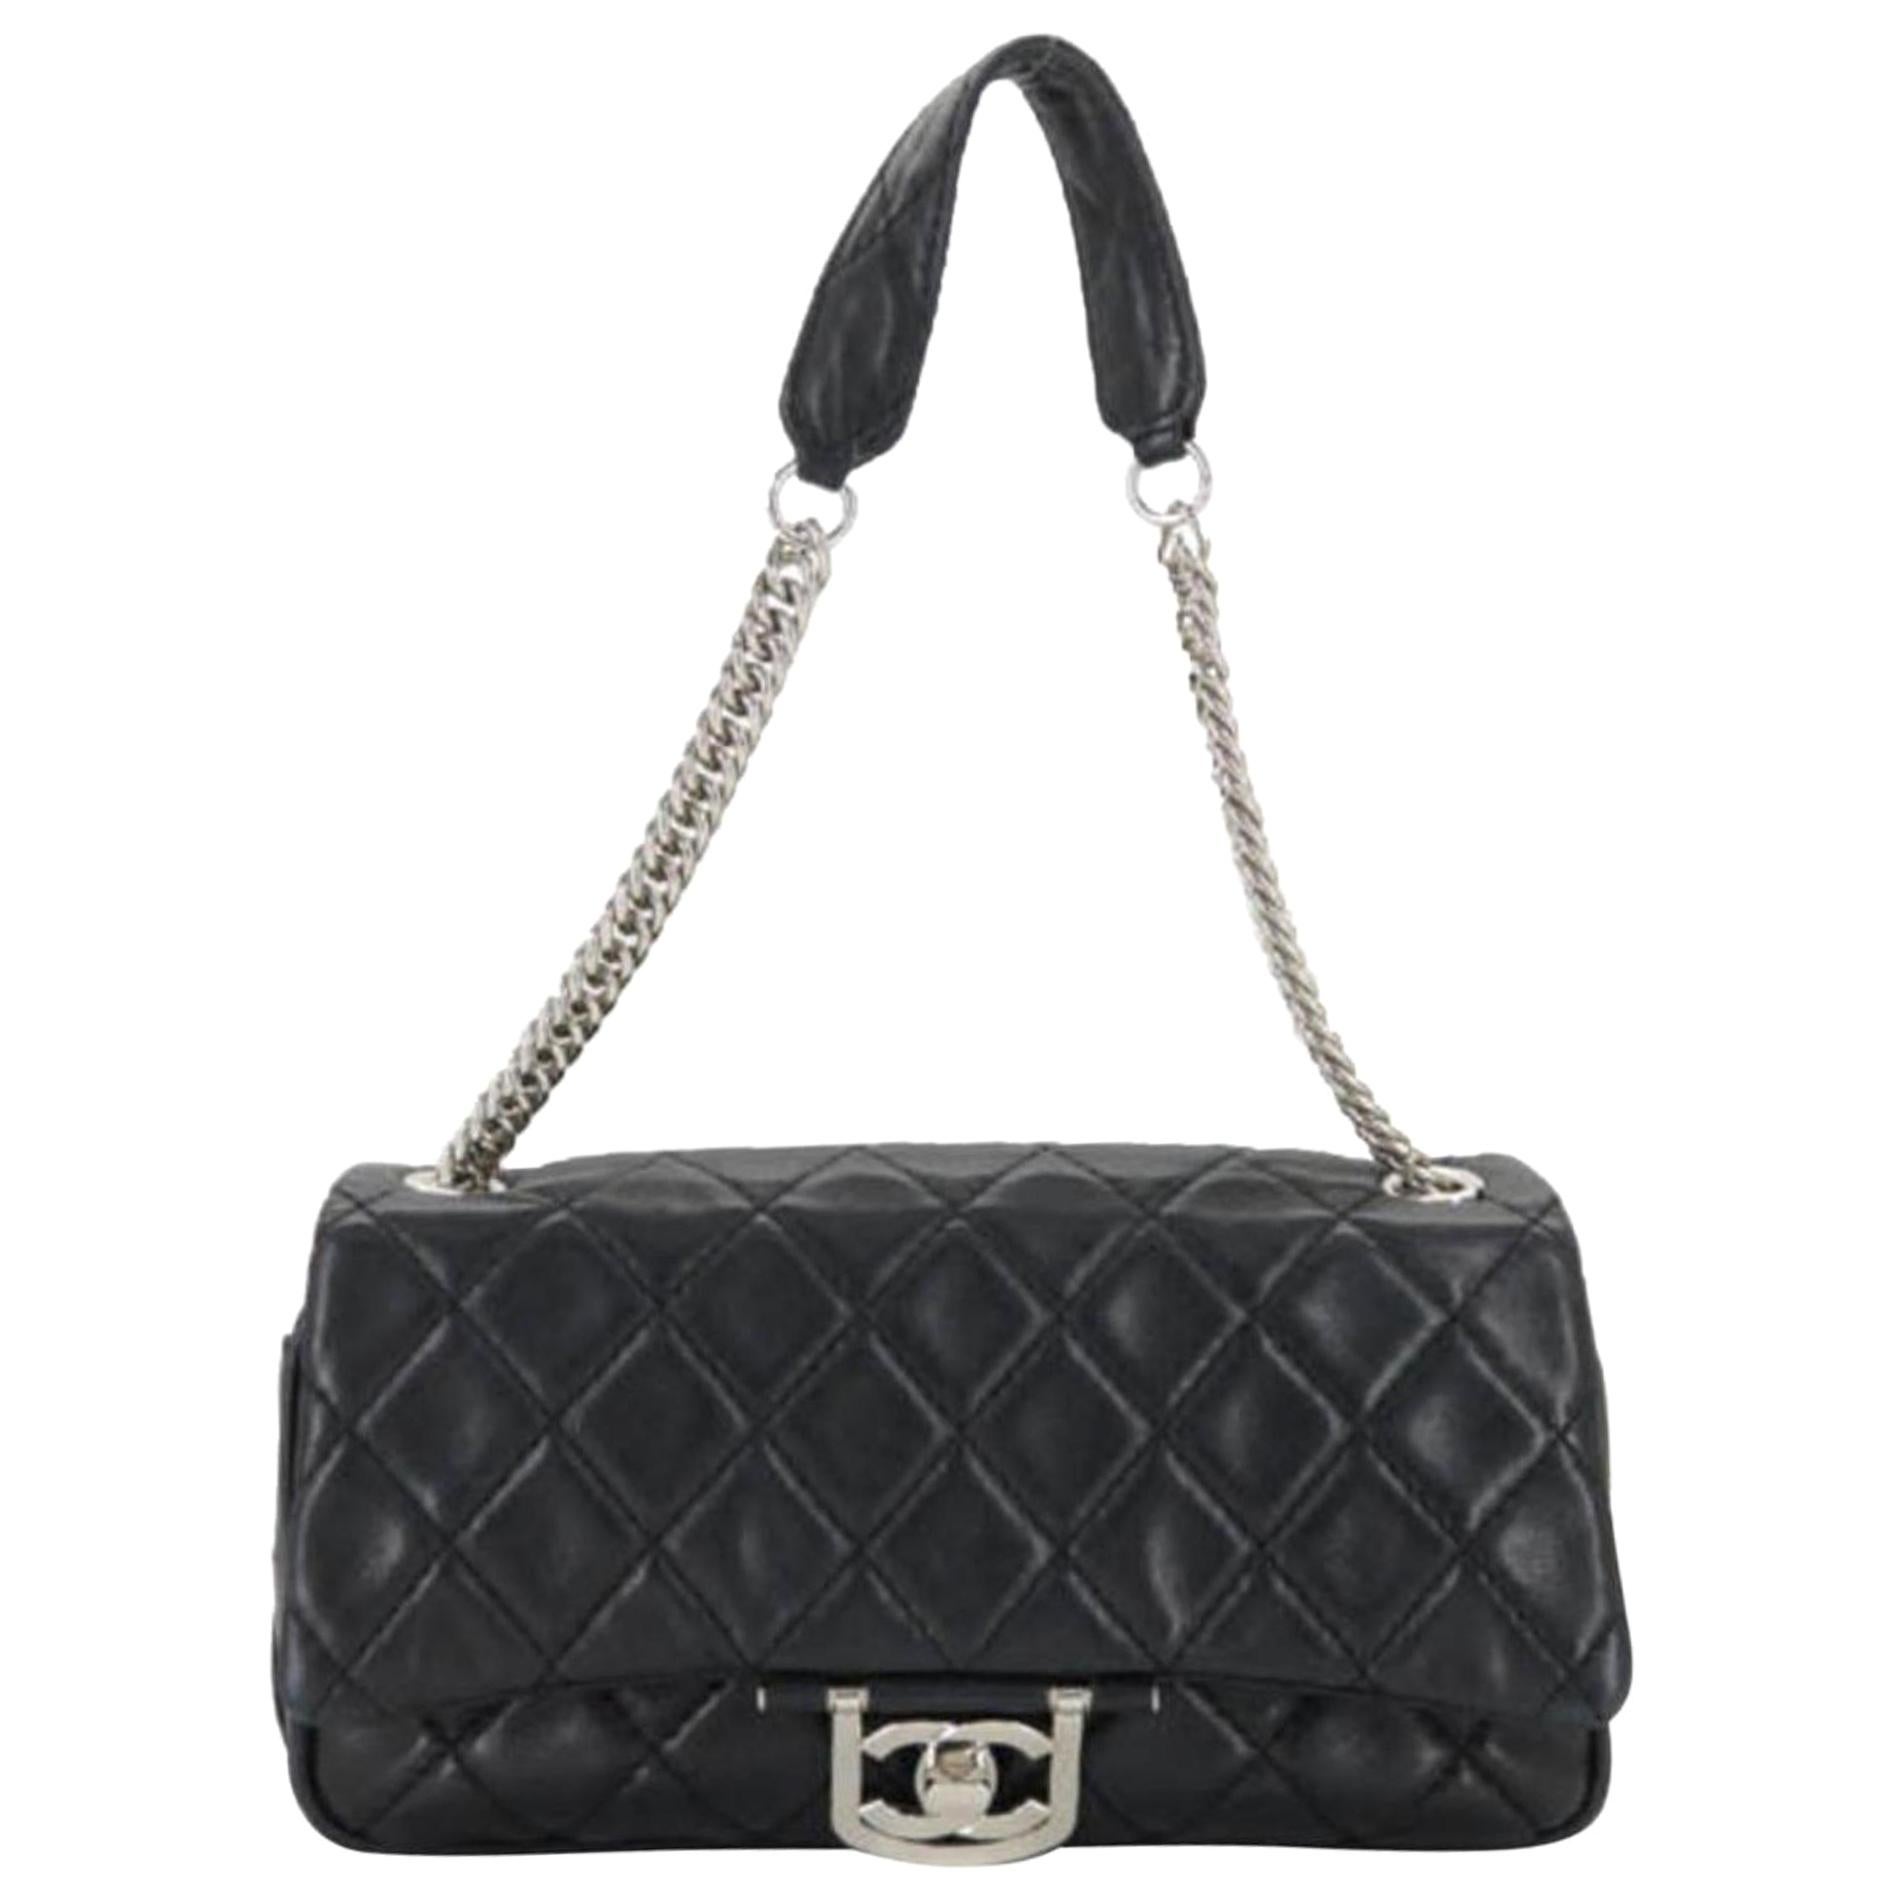 Chanel Large Classic Quilted Matelasse Flap 867200 Black Leather Shoulder Bag For Sale